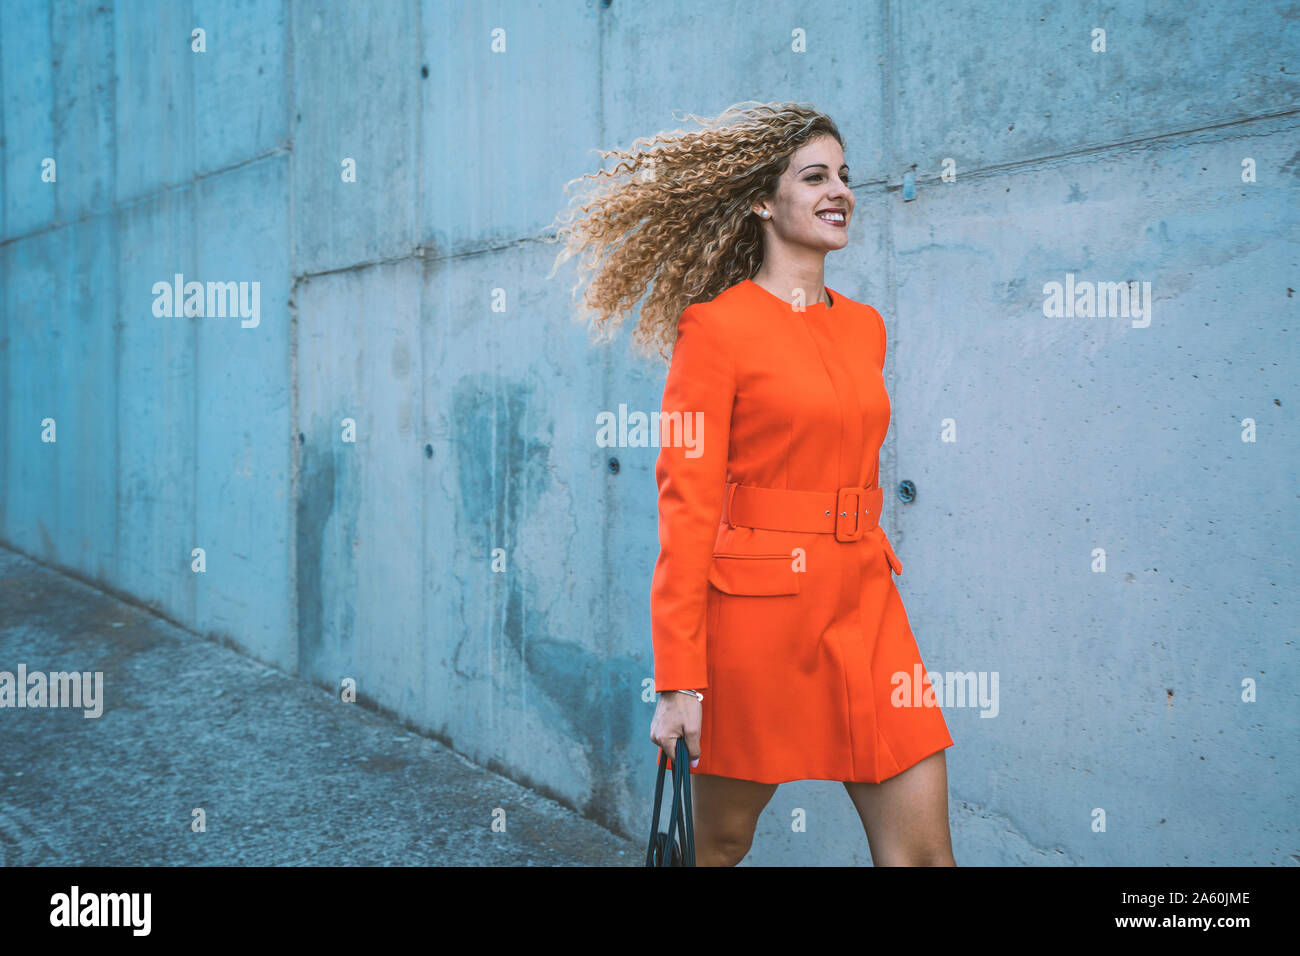 Happy young woman wearing red dress walking along street Stock Photo